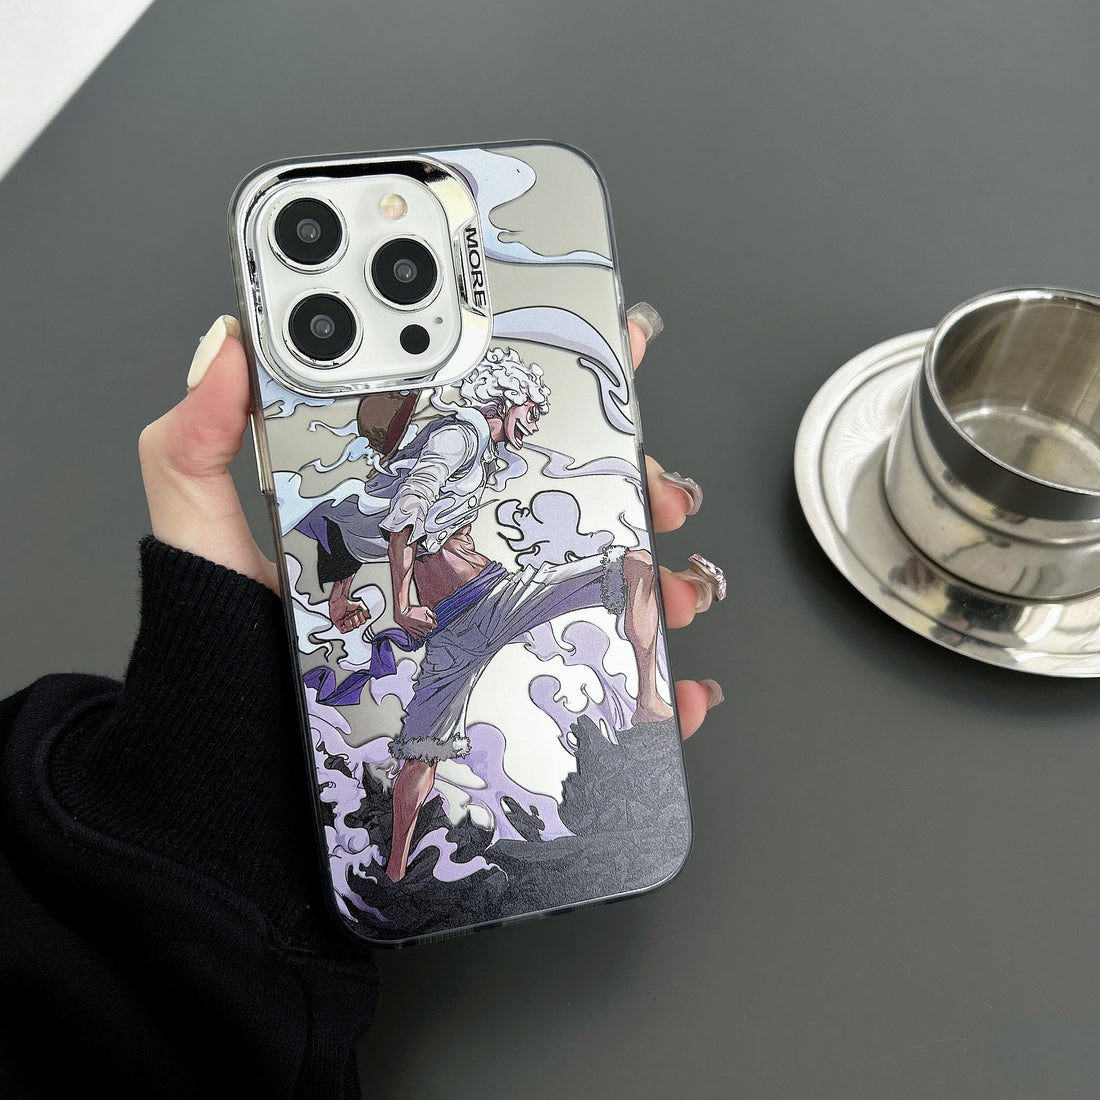 Gear 5 Luffy iPhone case